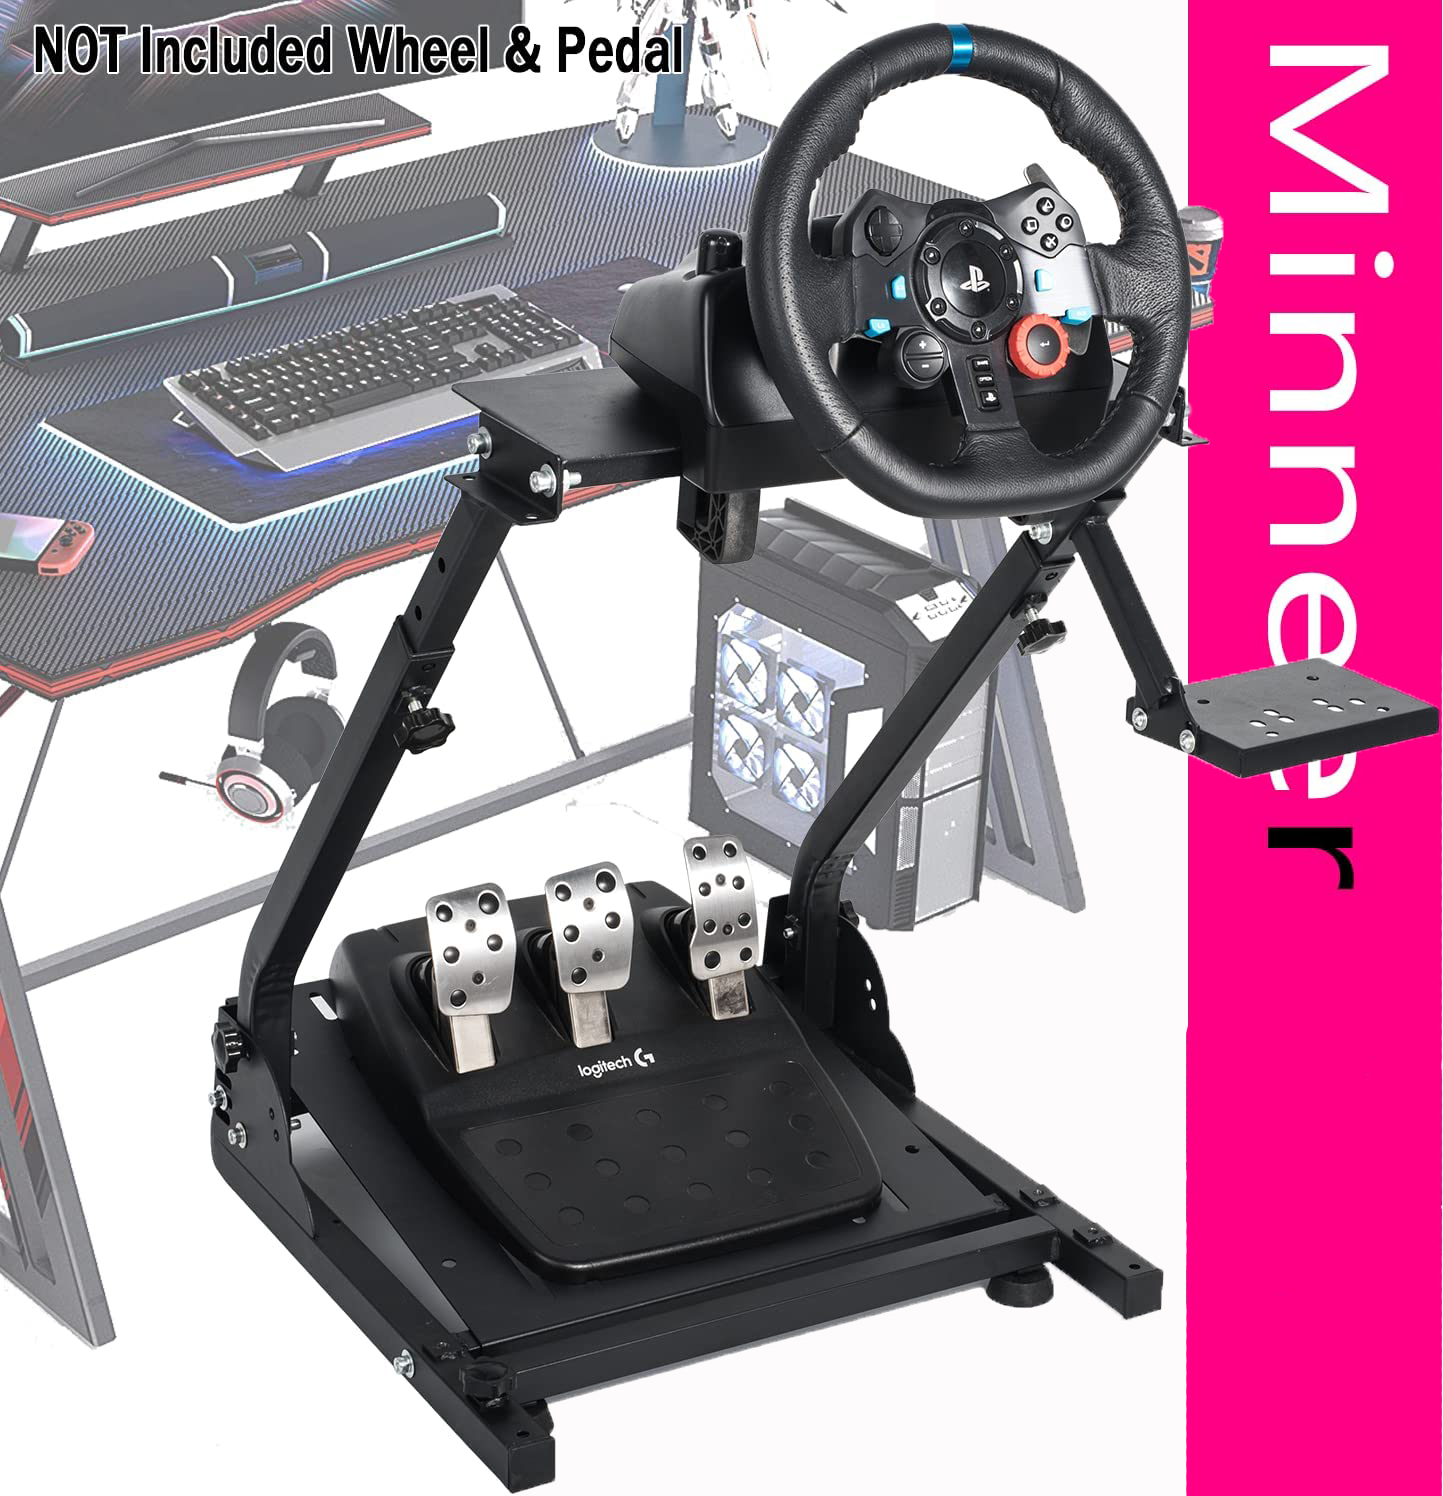 Minneer G923 Racing Wheel Stand Height Adjustable for Logitech G25 G27 G29  G920 Thrustmaster 